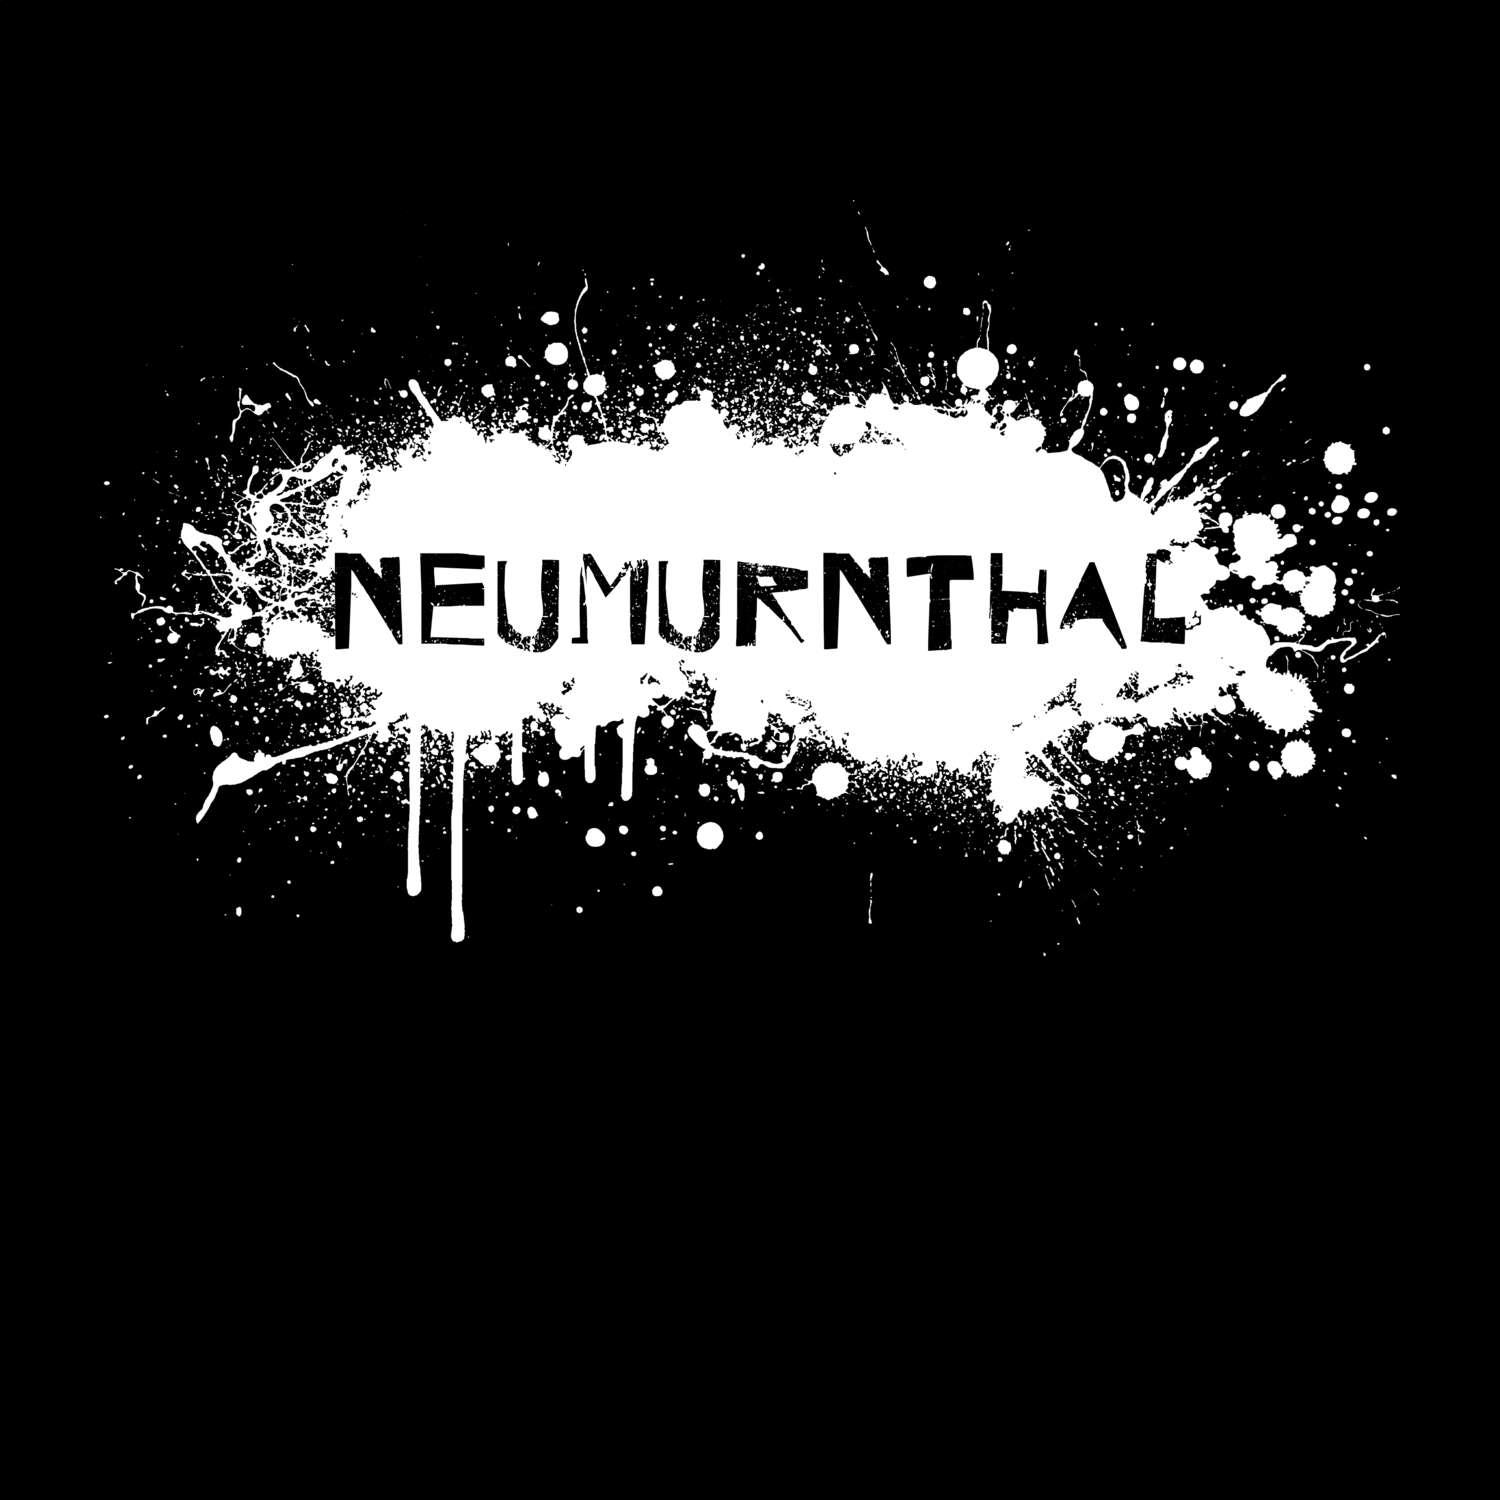 Neumurnthal T-Shirt »Paint Splash Punk«